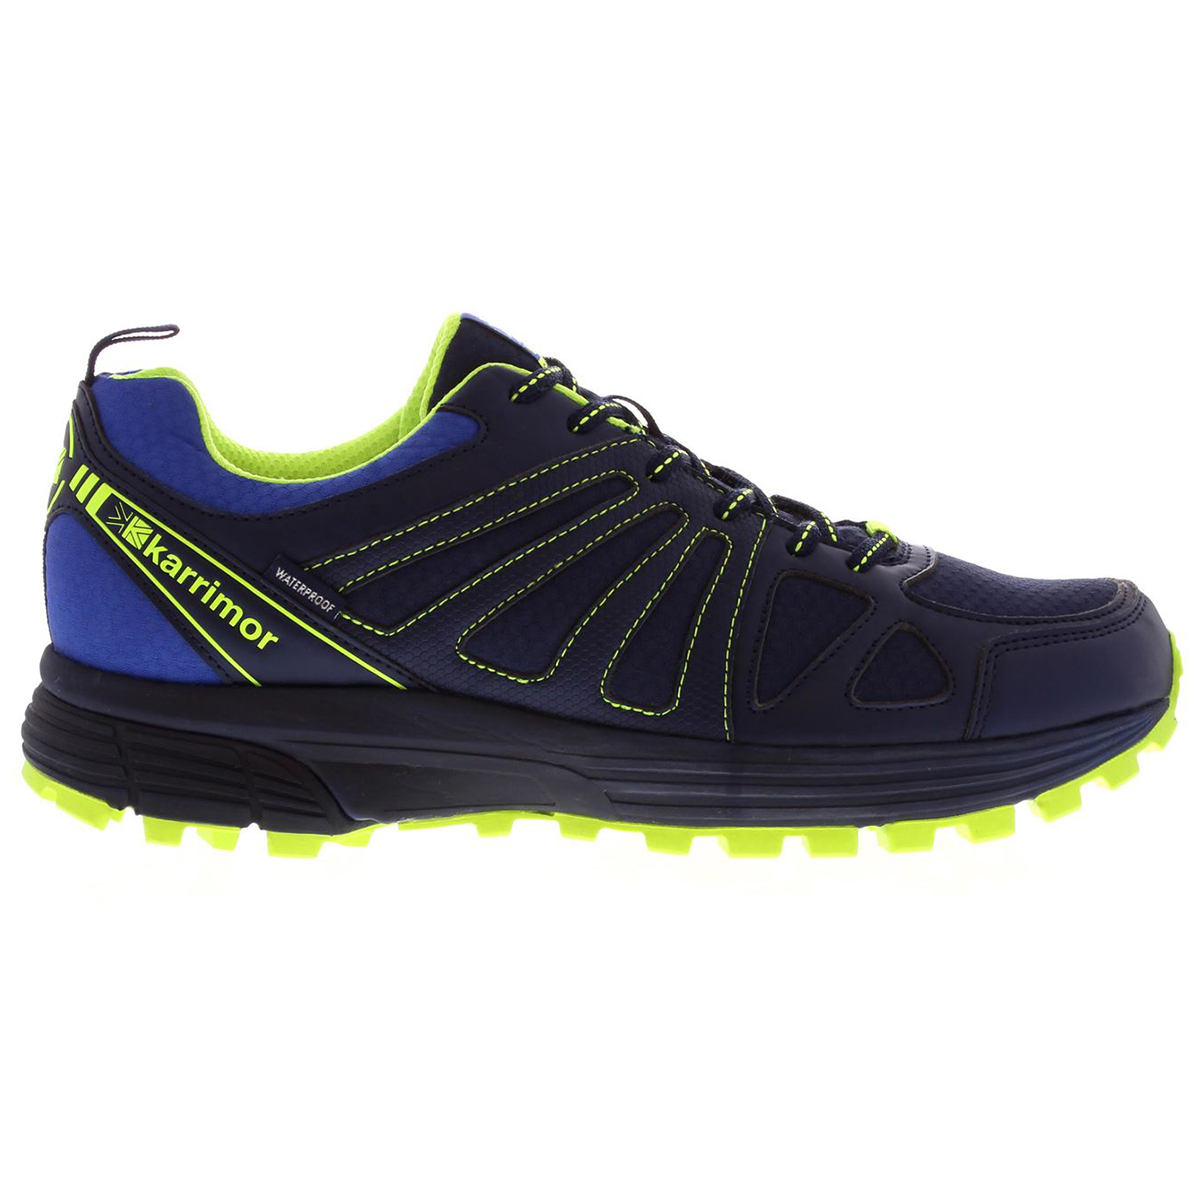 Karrimor Men's Caracal Waterproof Trail Running Shoes - Blue, 13